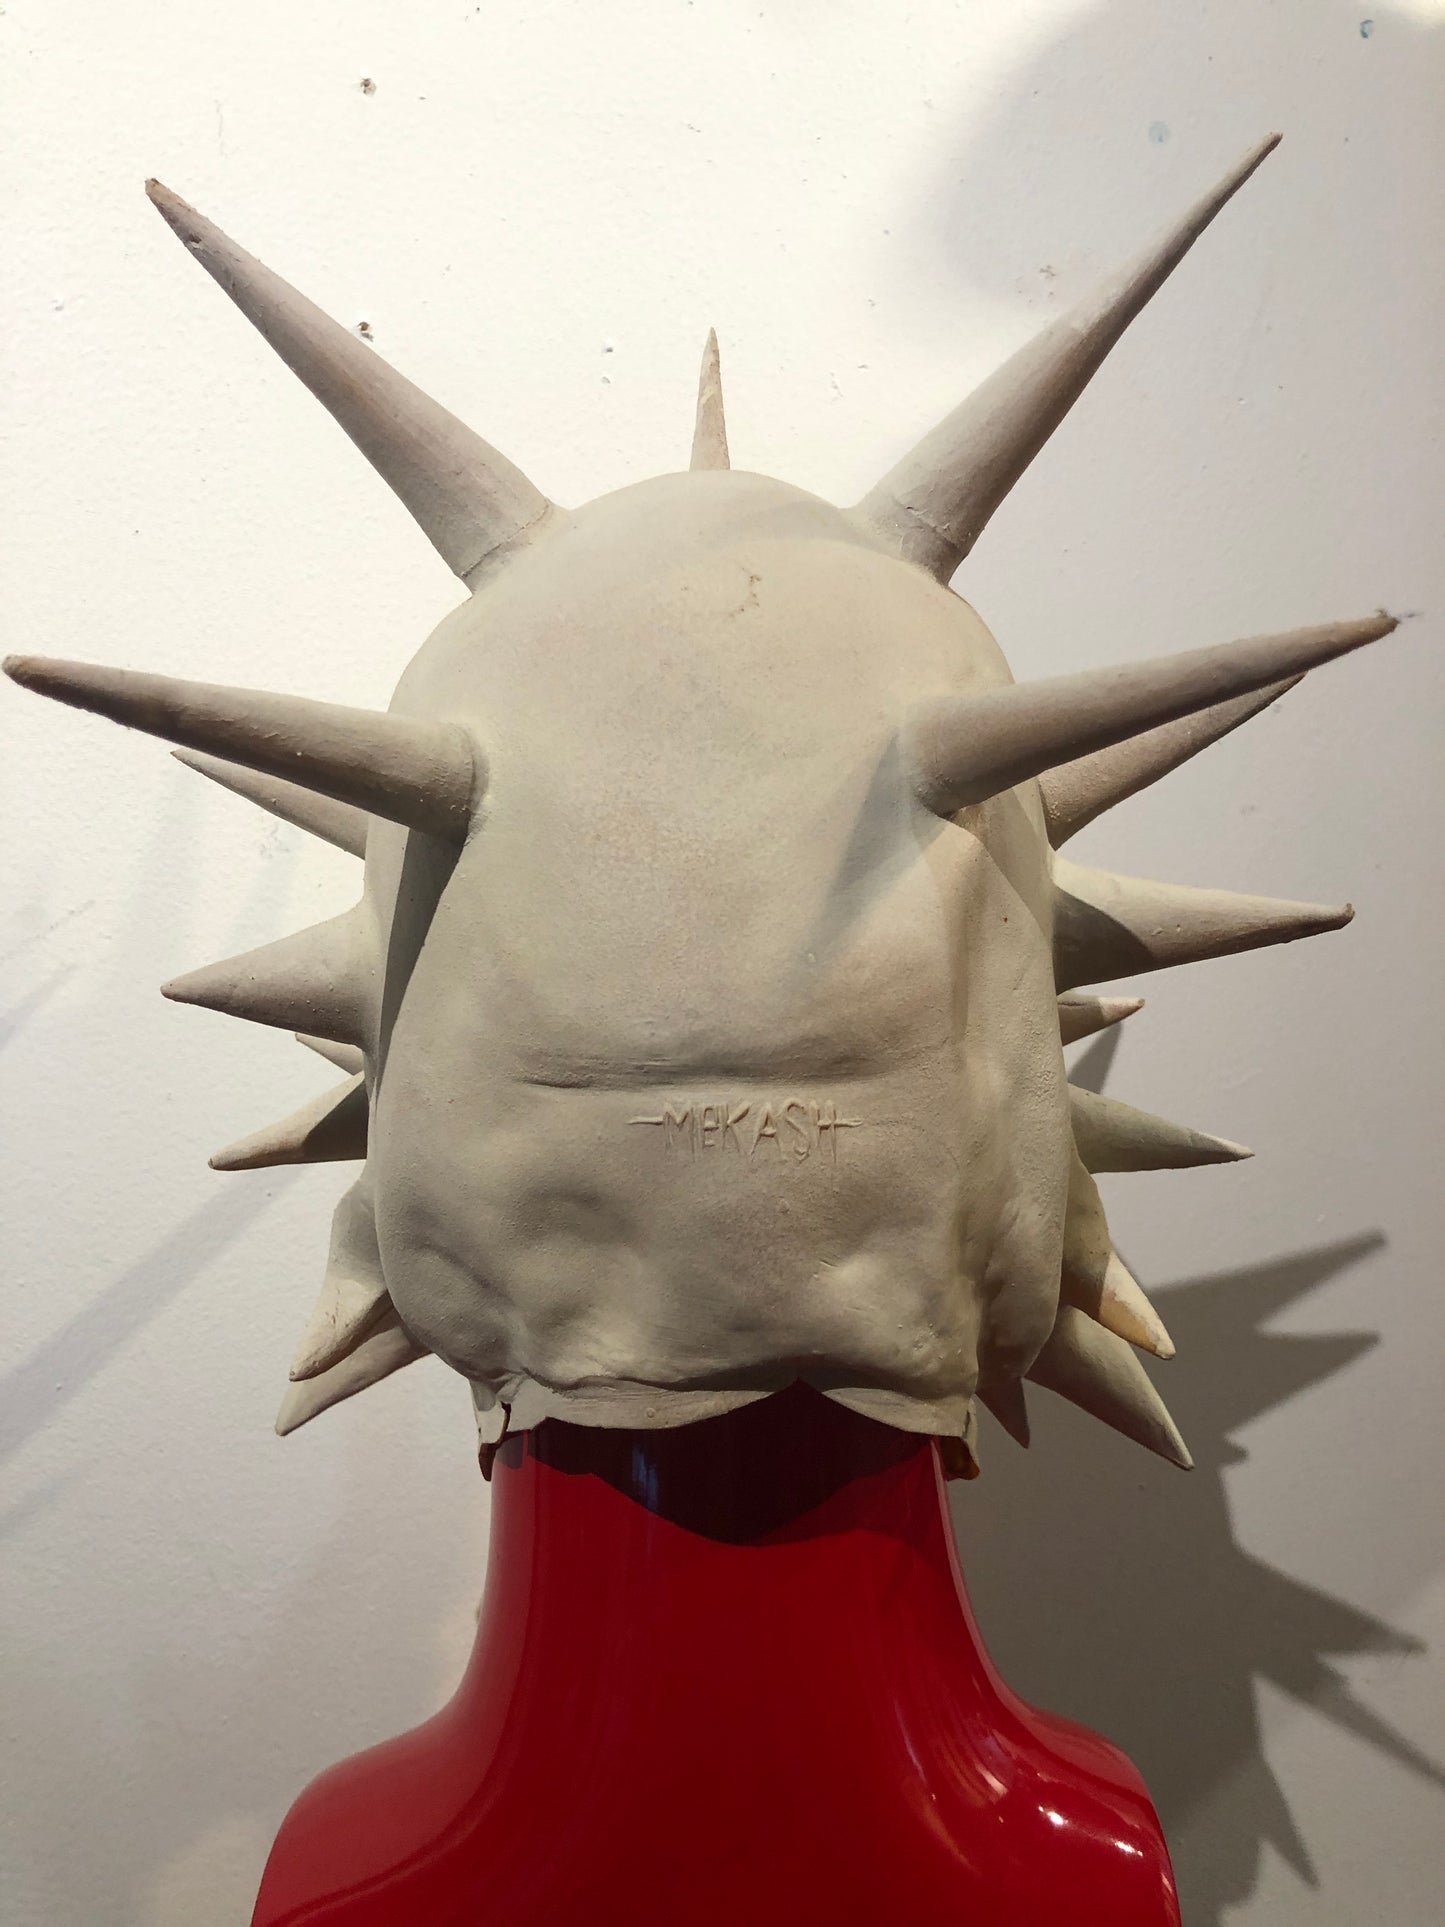 Michael Mekash "Corrosion of Conformity" Mask Sculpture